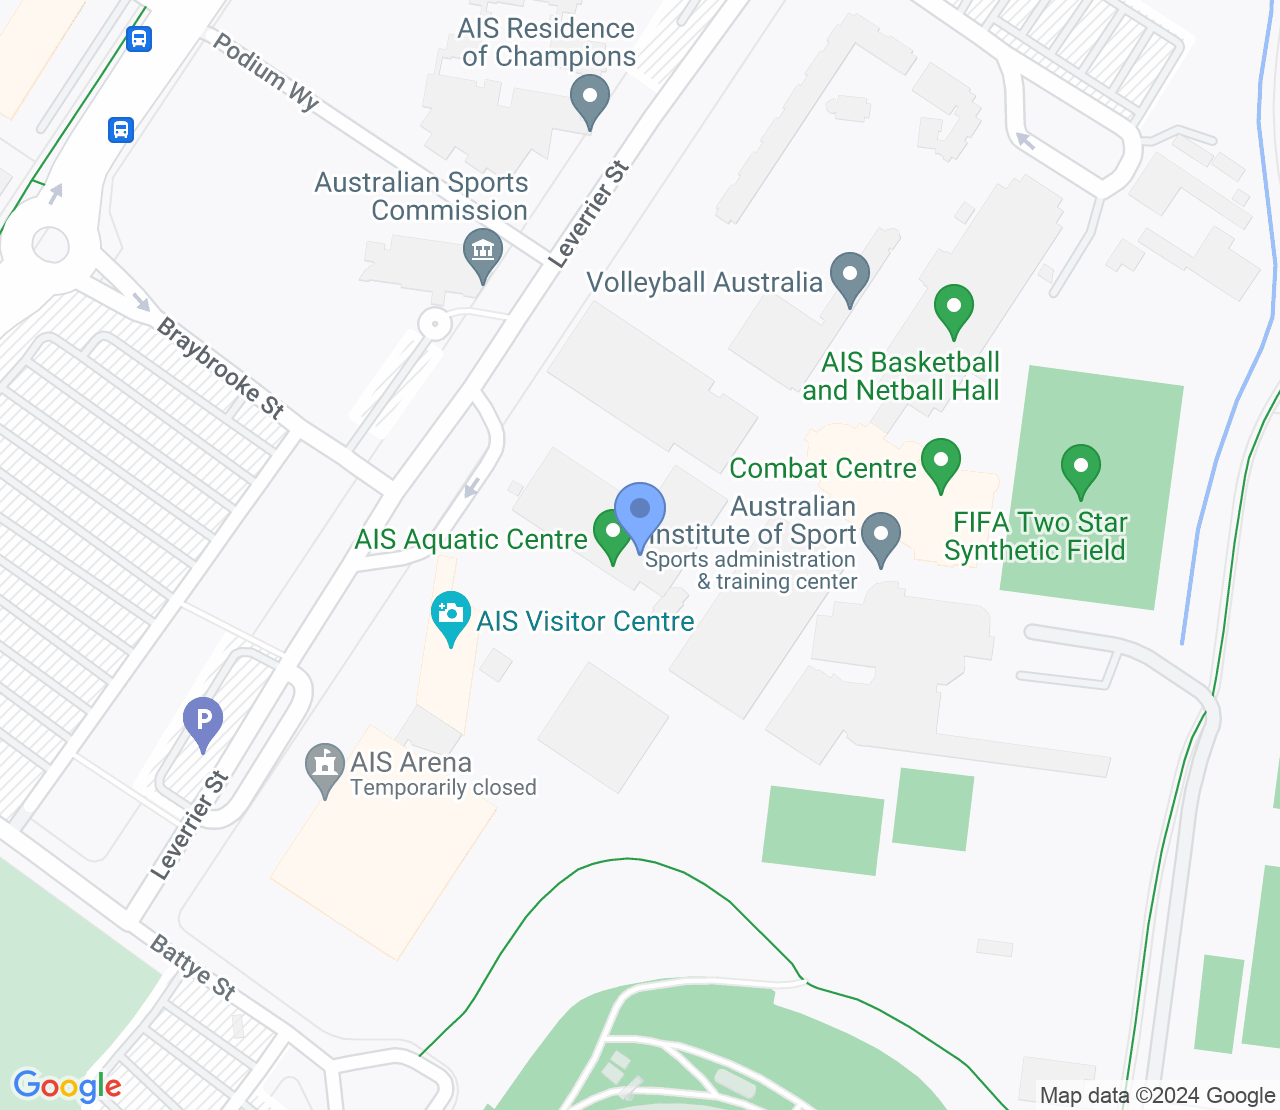 Google Maps image of Canberra Australian Institute of Sport